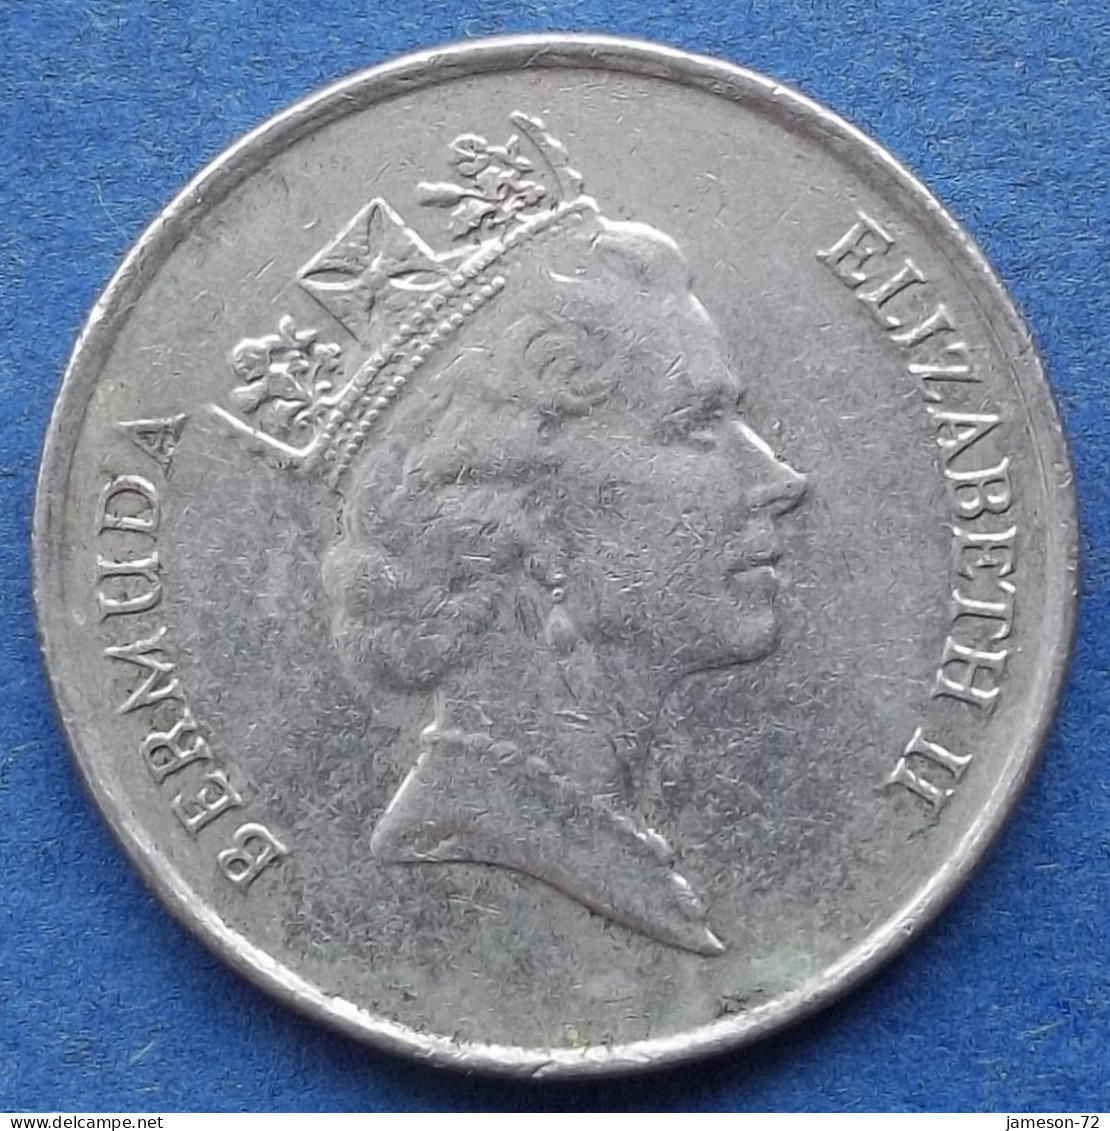 BERMUDA - 25 Cents 1995 "White-tailed Tropicbird" KM# 47 Elizabeth II Decimal Coinage (1970-2022) - Edelweiss Coins - Bermudes